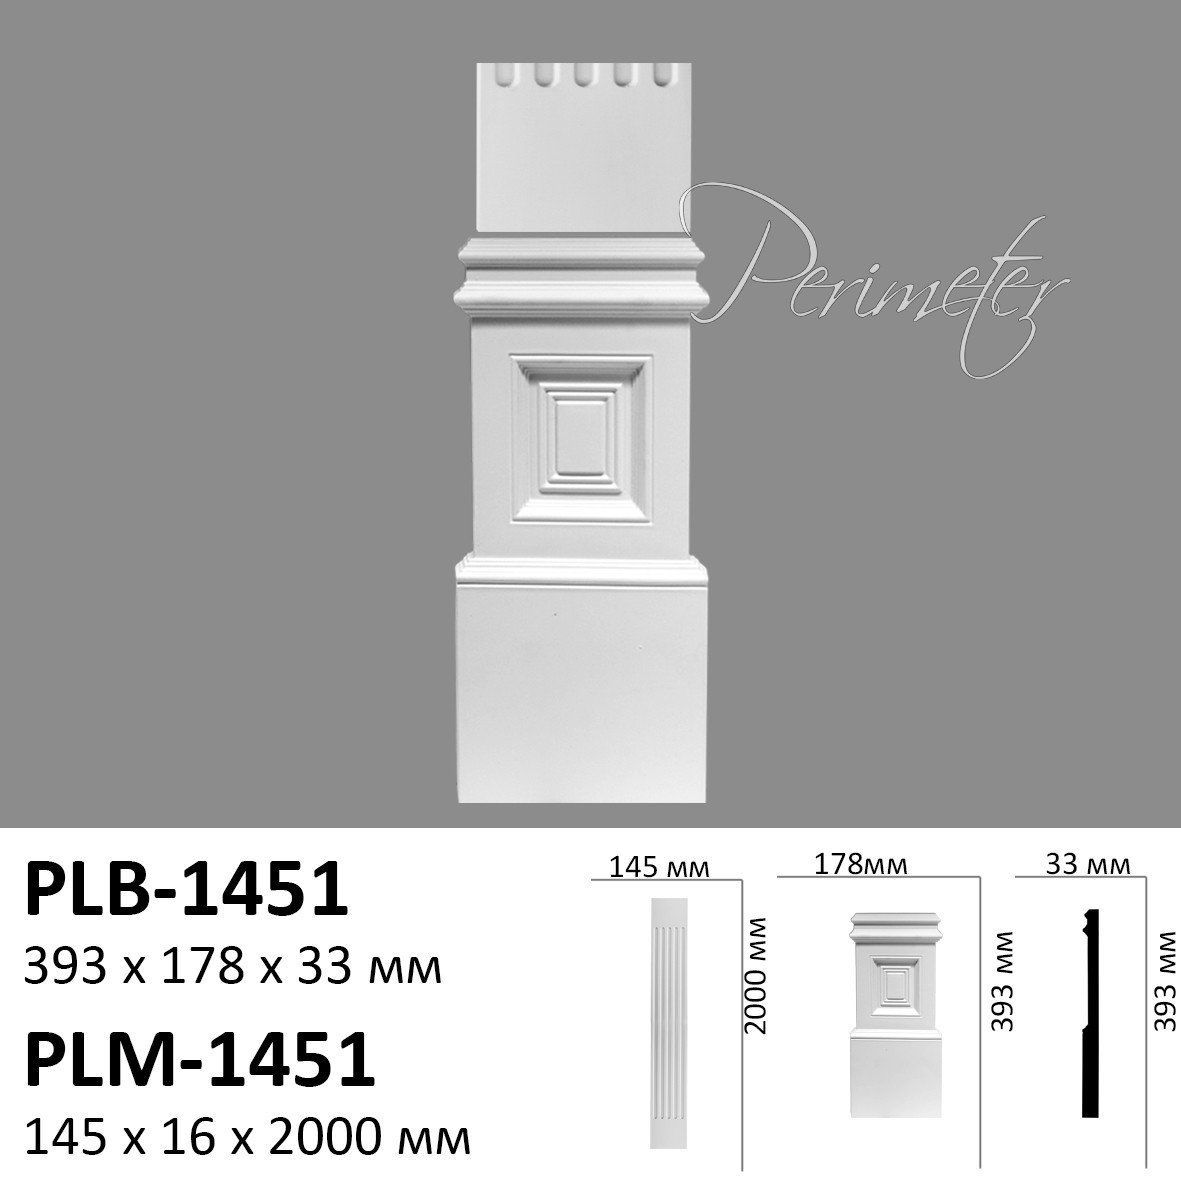 Пилястра Пьедестал Perimeter PLM-1451